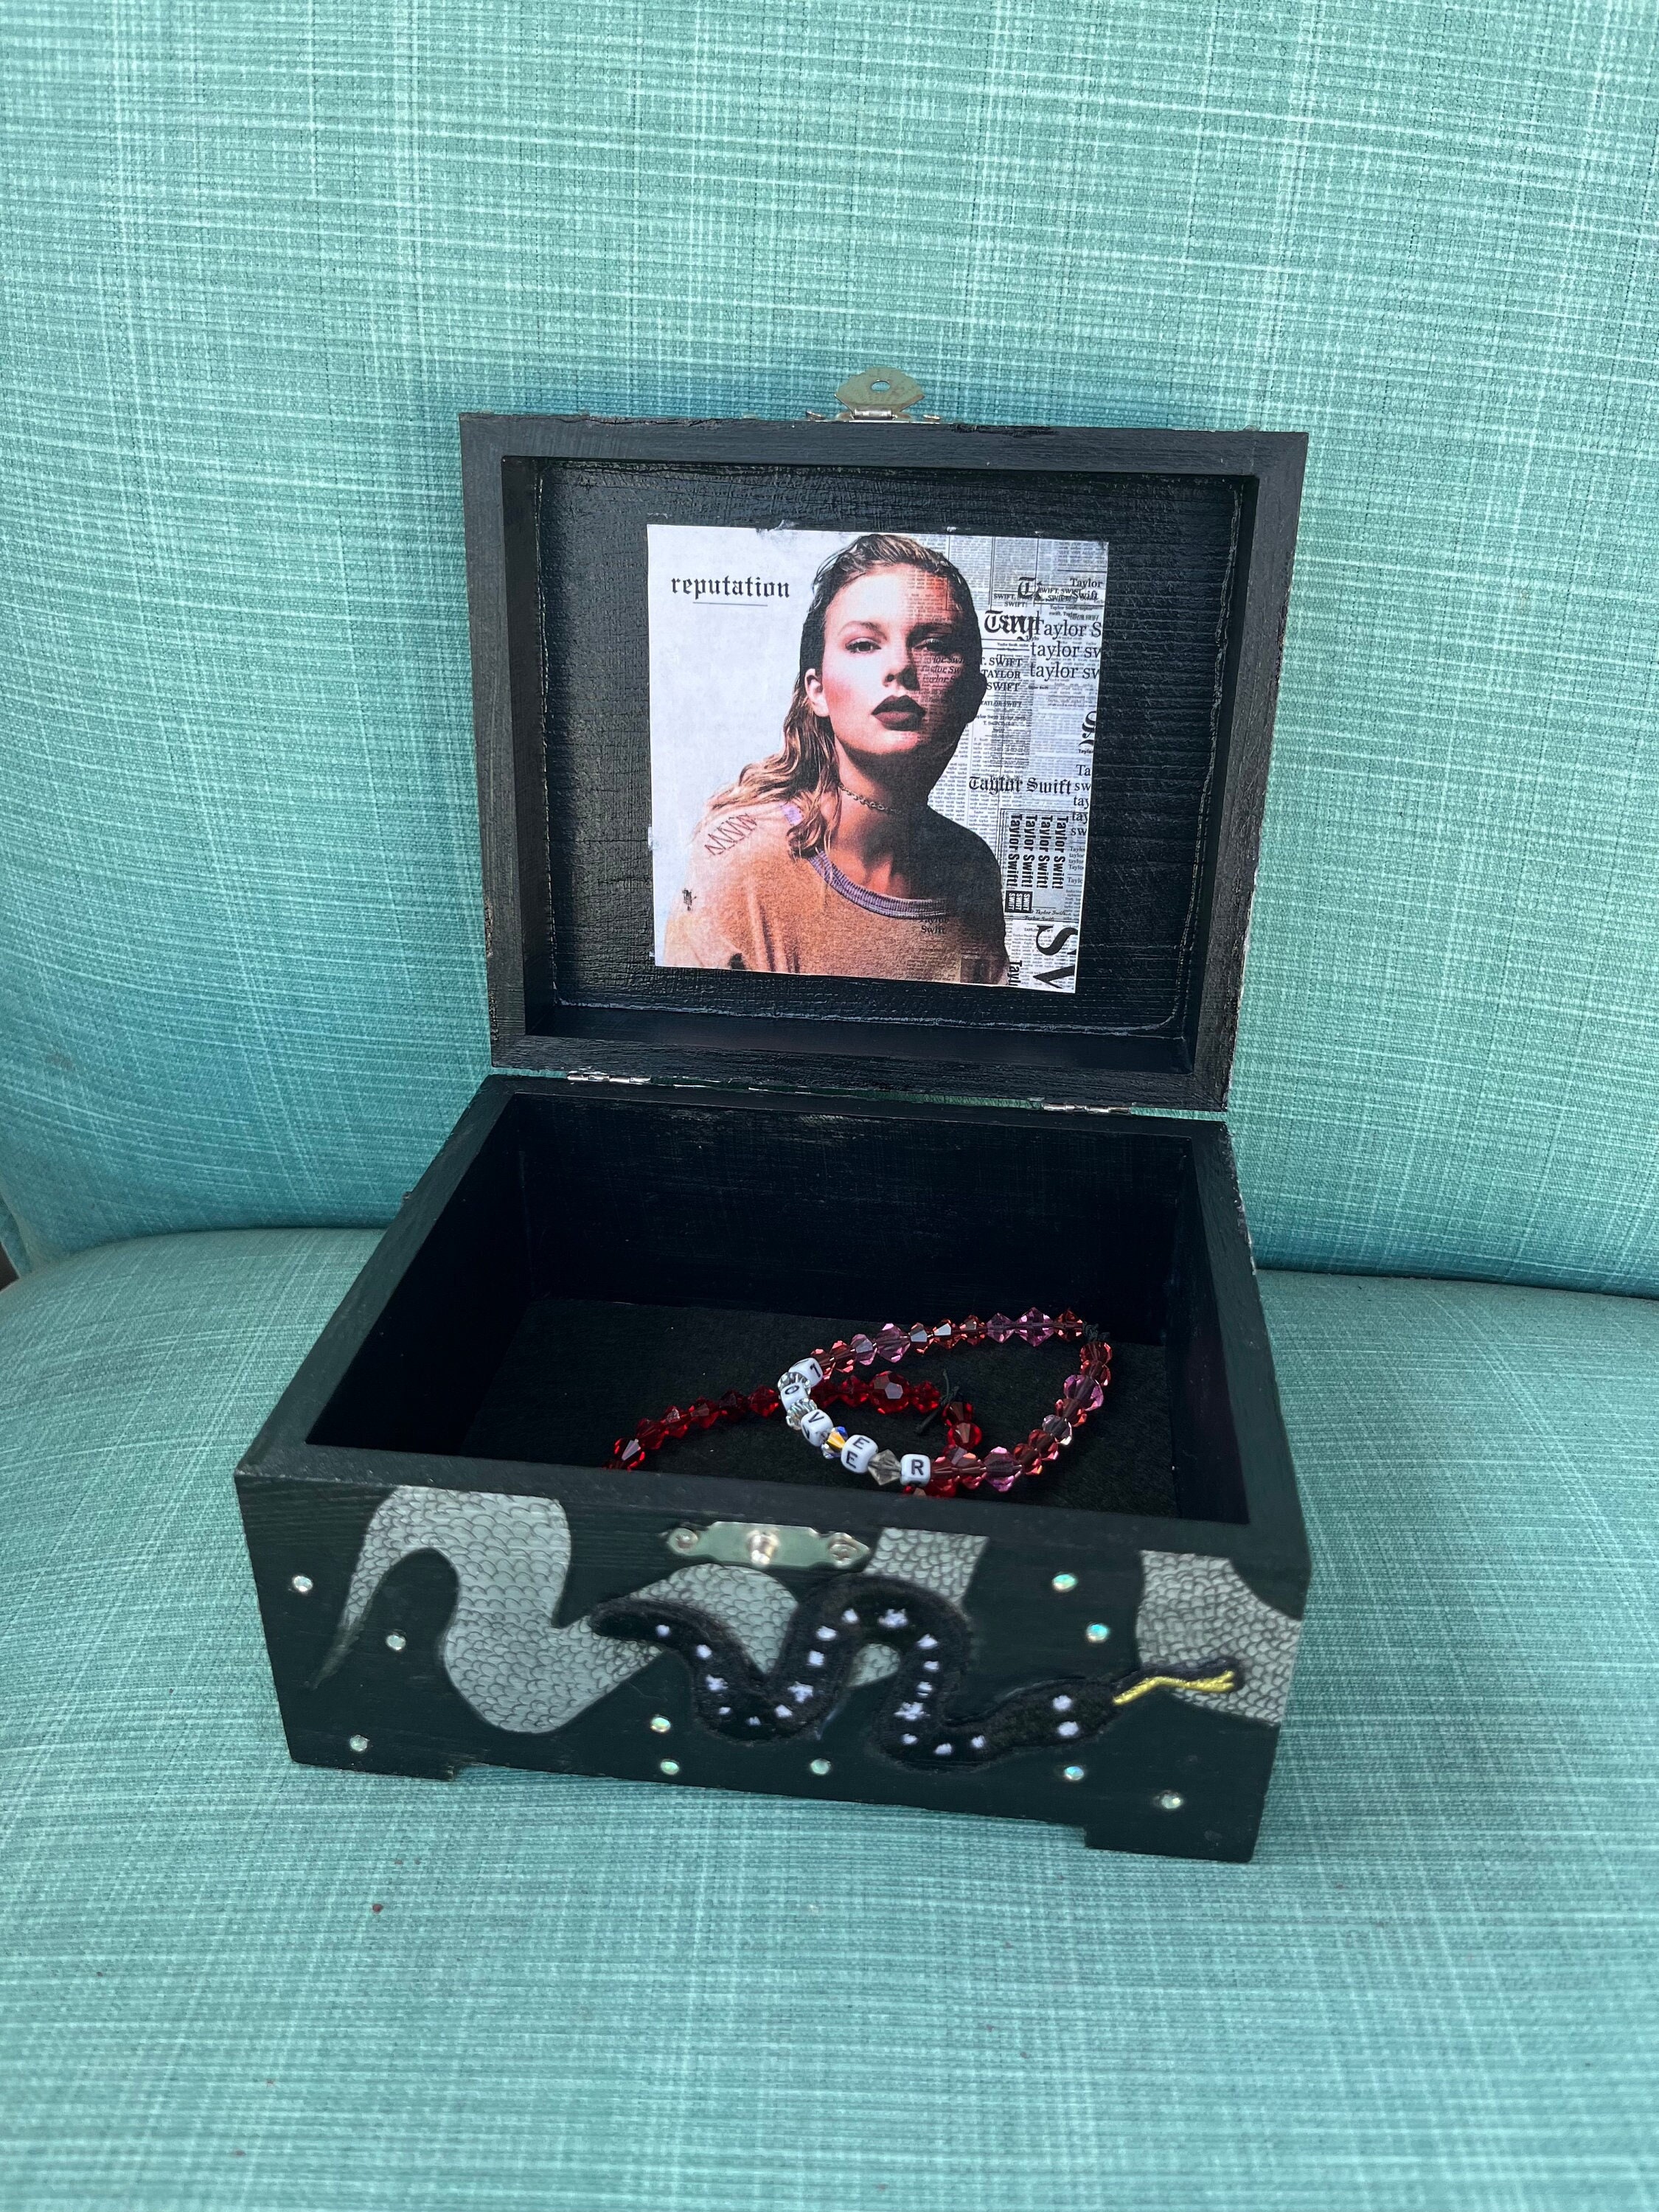 ivy jewelry box : r/TaylorSwift